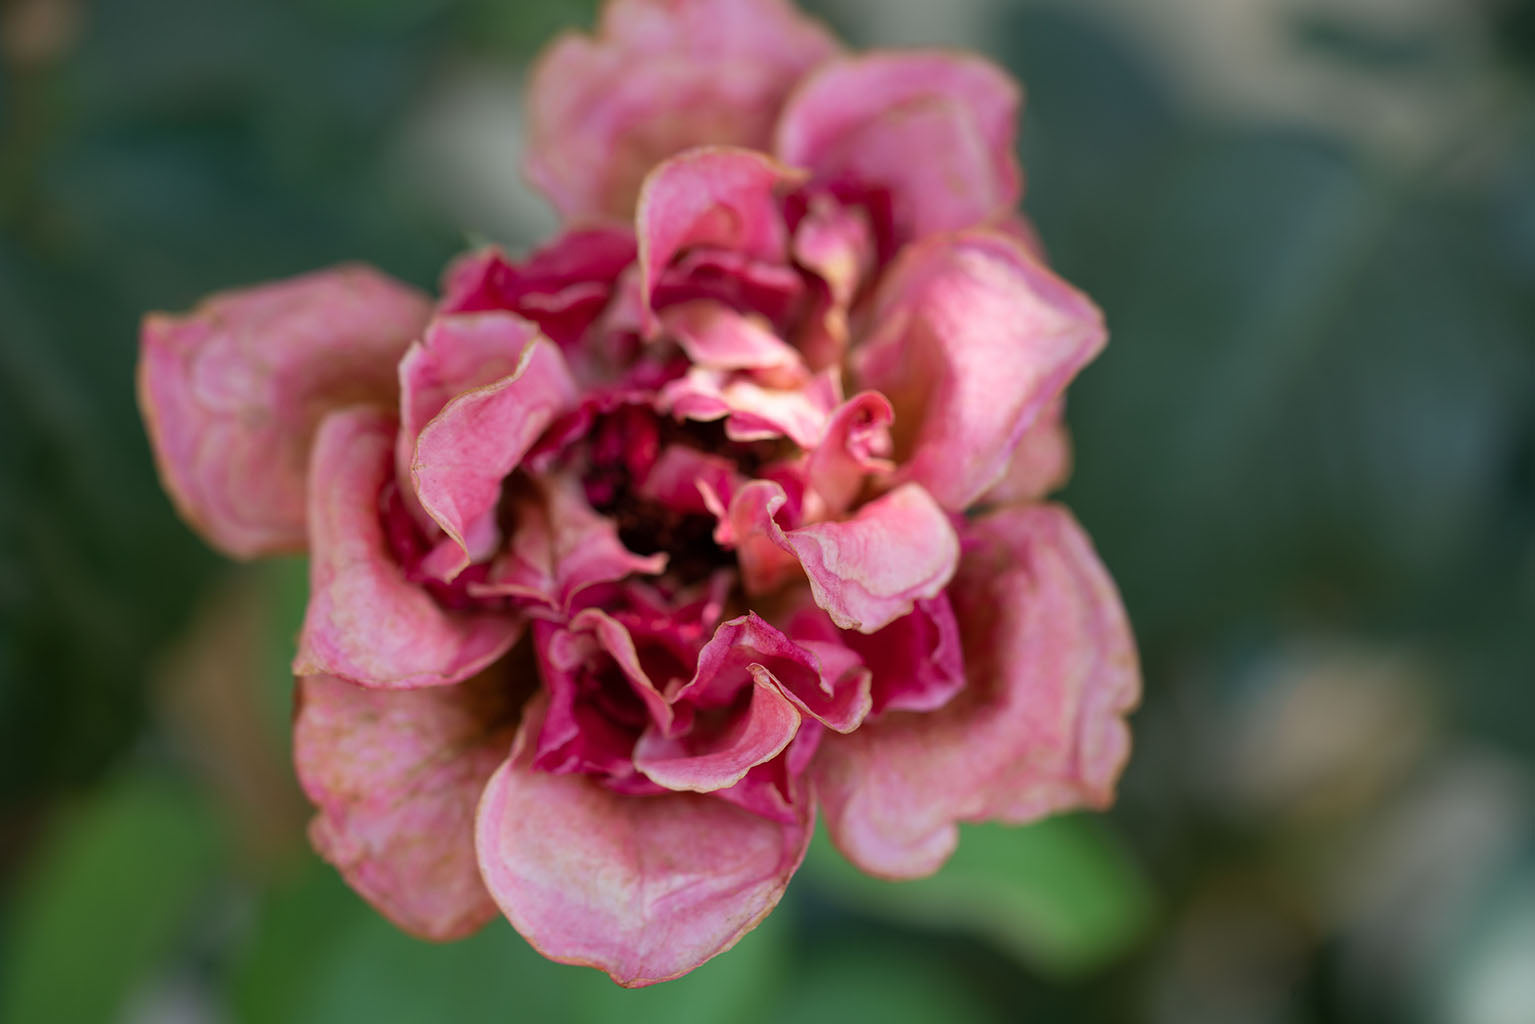 Botanical, rose flower, leafy green background.